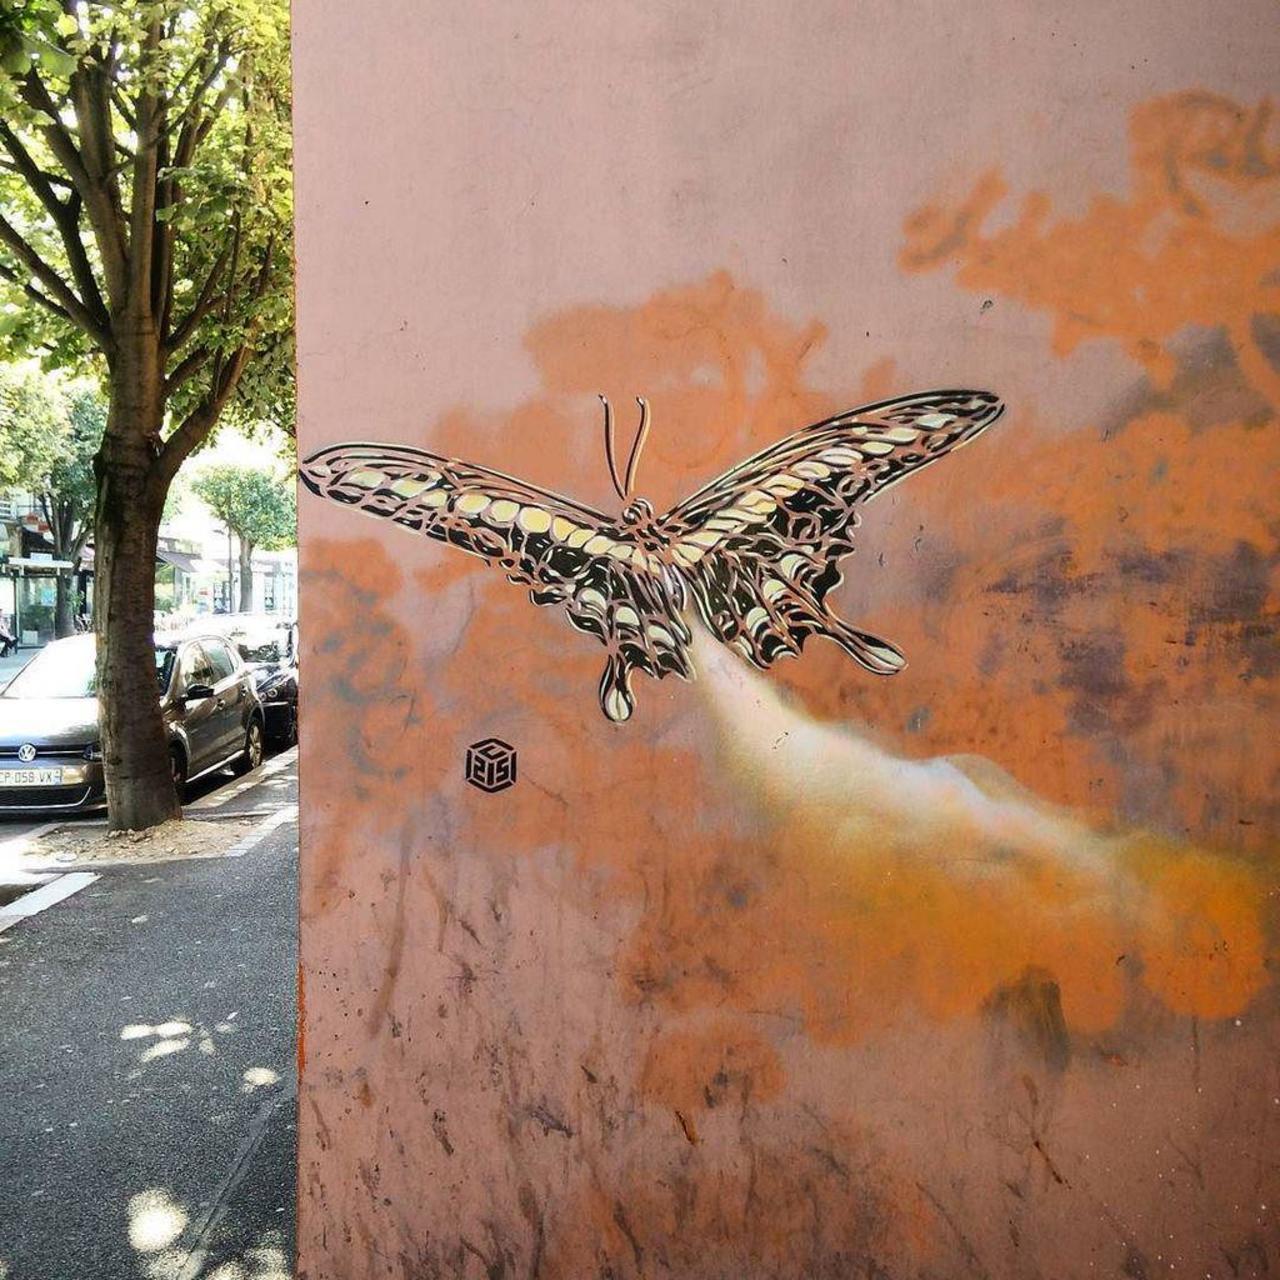 RT @StArtEverywhere: Butterfly by #C215 @christianguemy 
#streetart #streetartparis #parisstreetart #parisgraffiti #graffiti #graffitiar… http://t.co/stmxd1PnCq